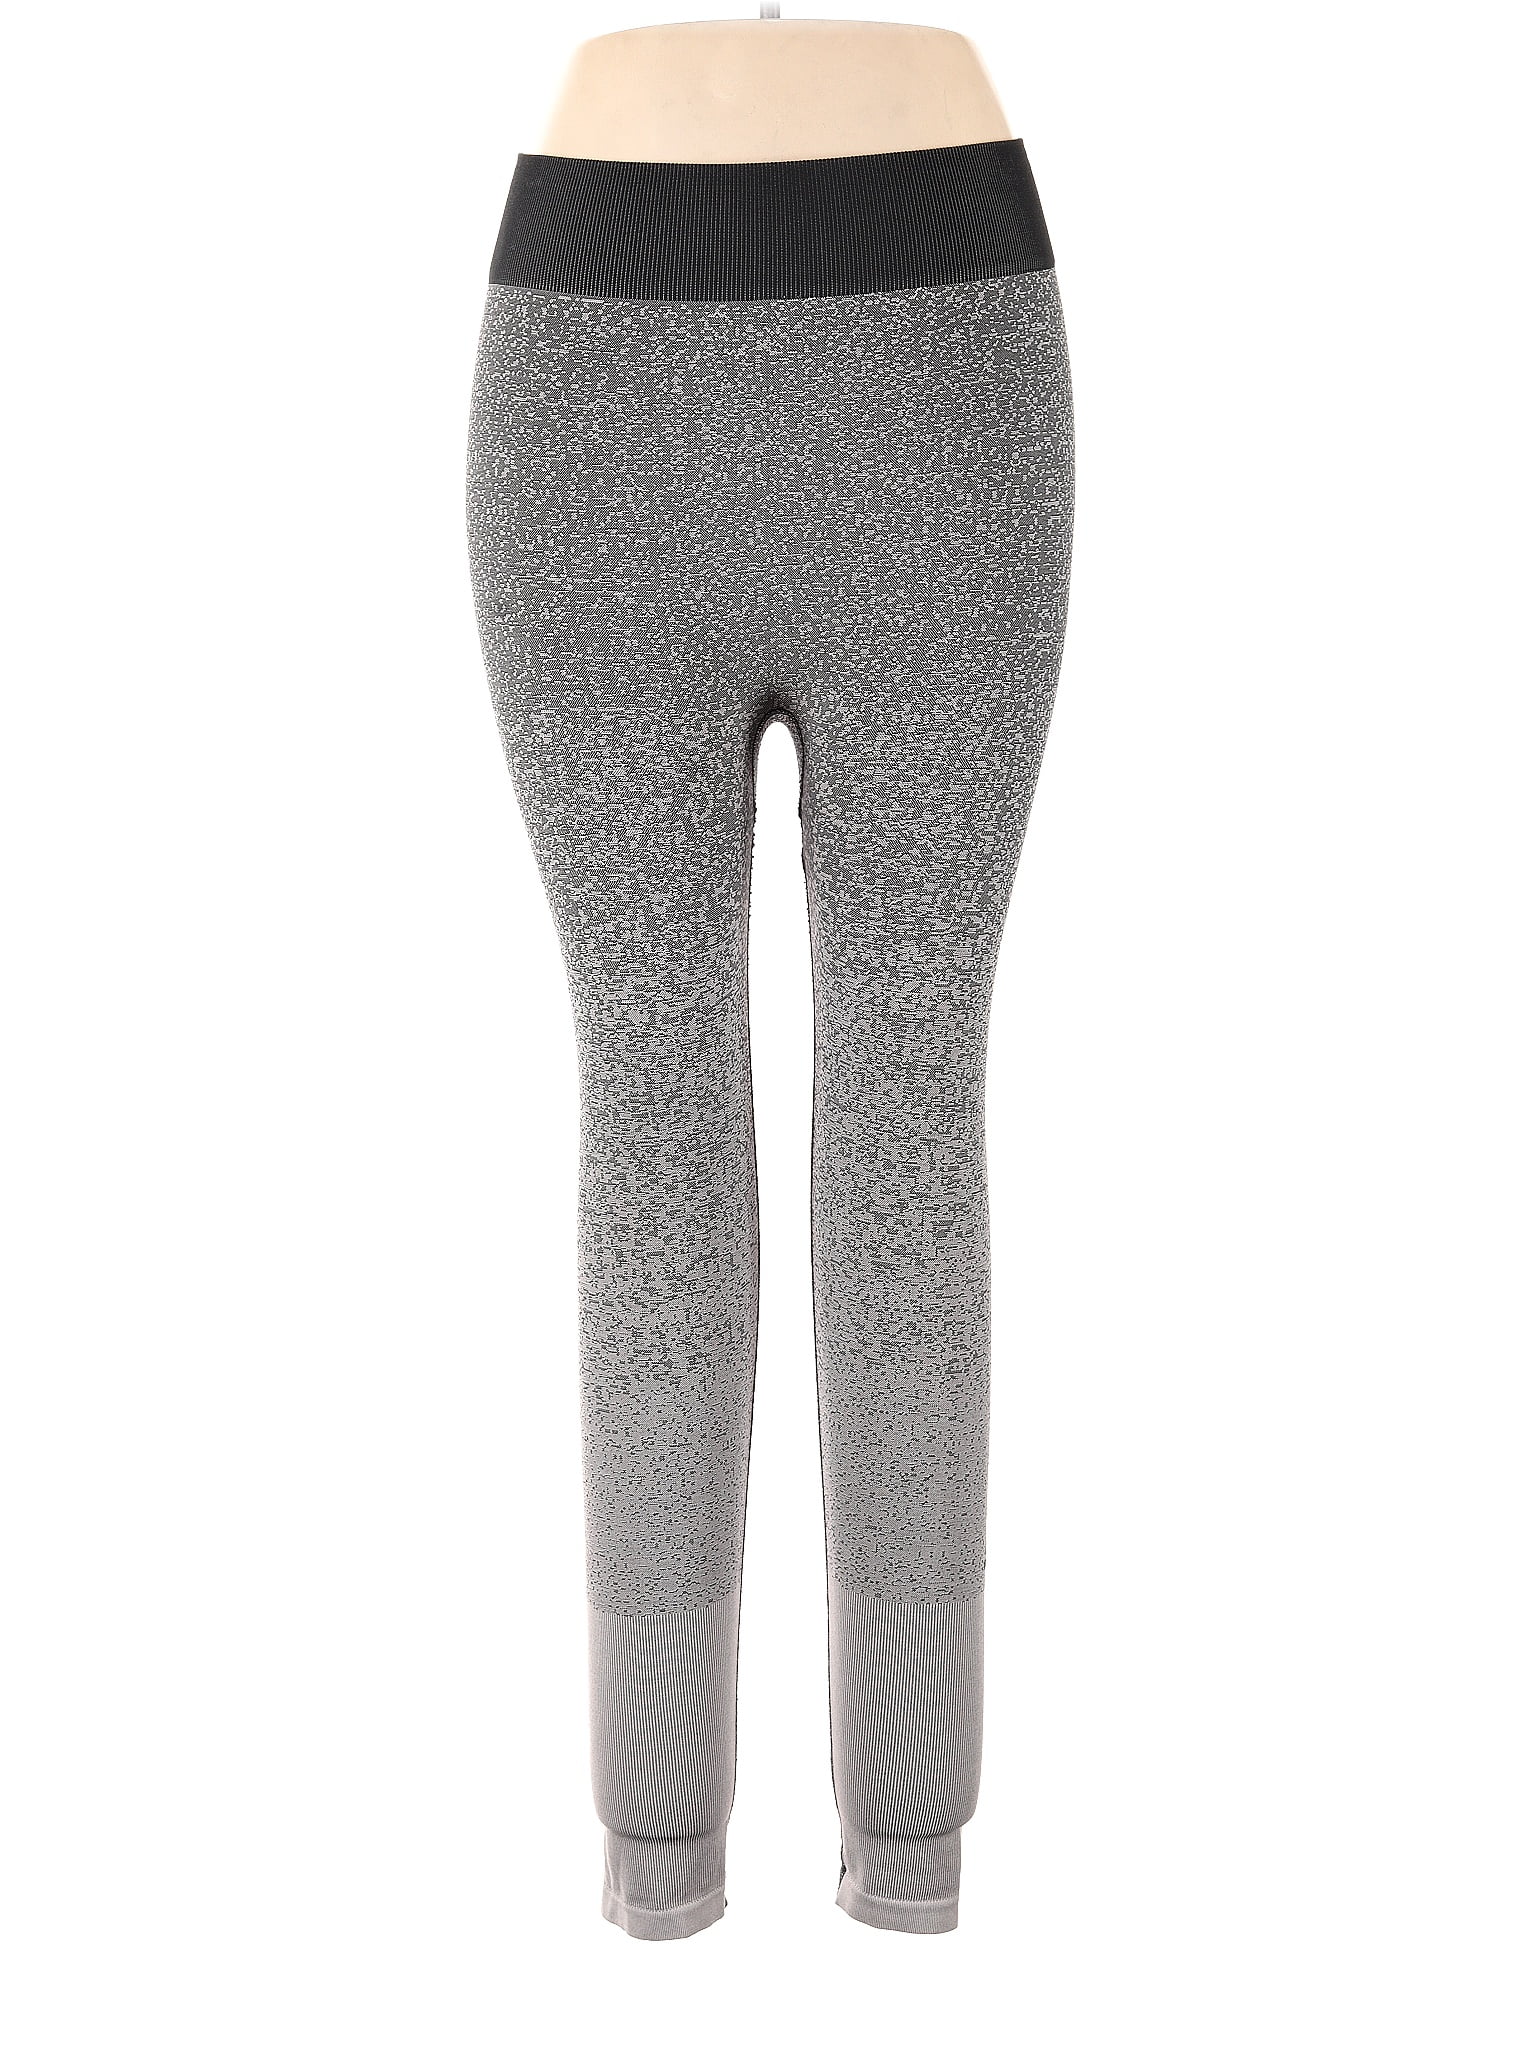 Adidas Gray Active Pants Size XL - 61% off